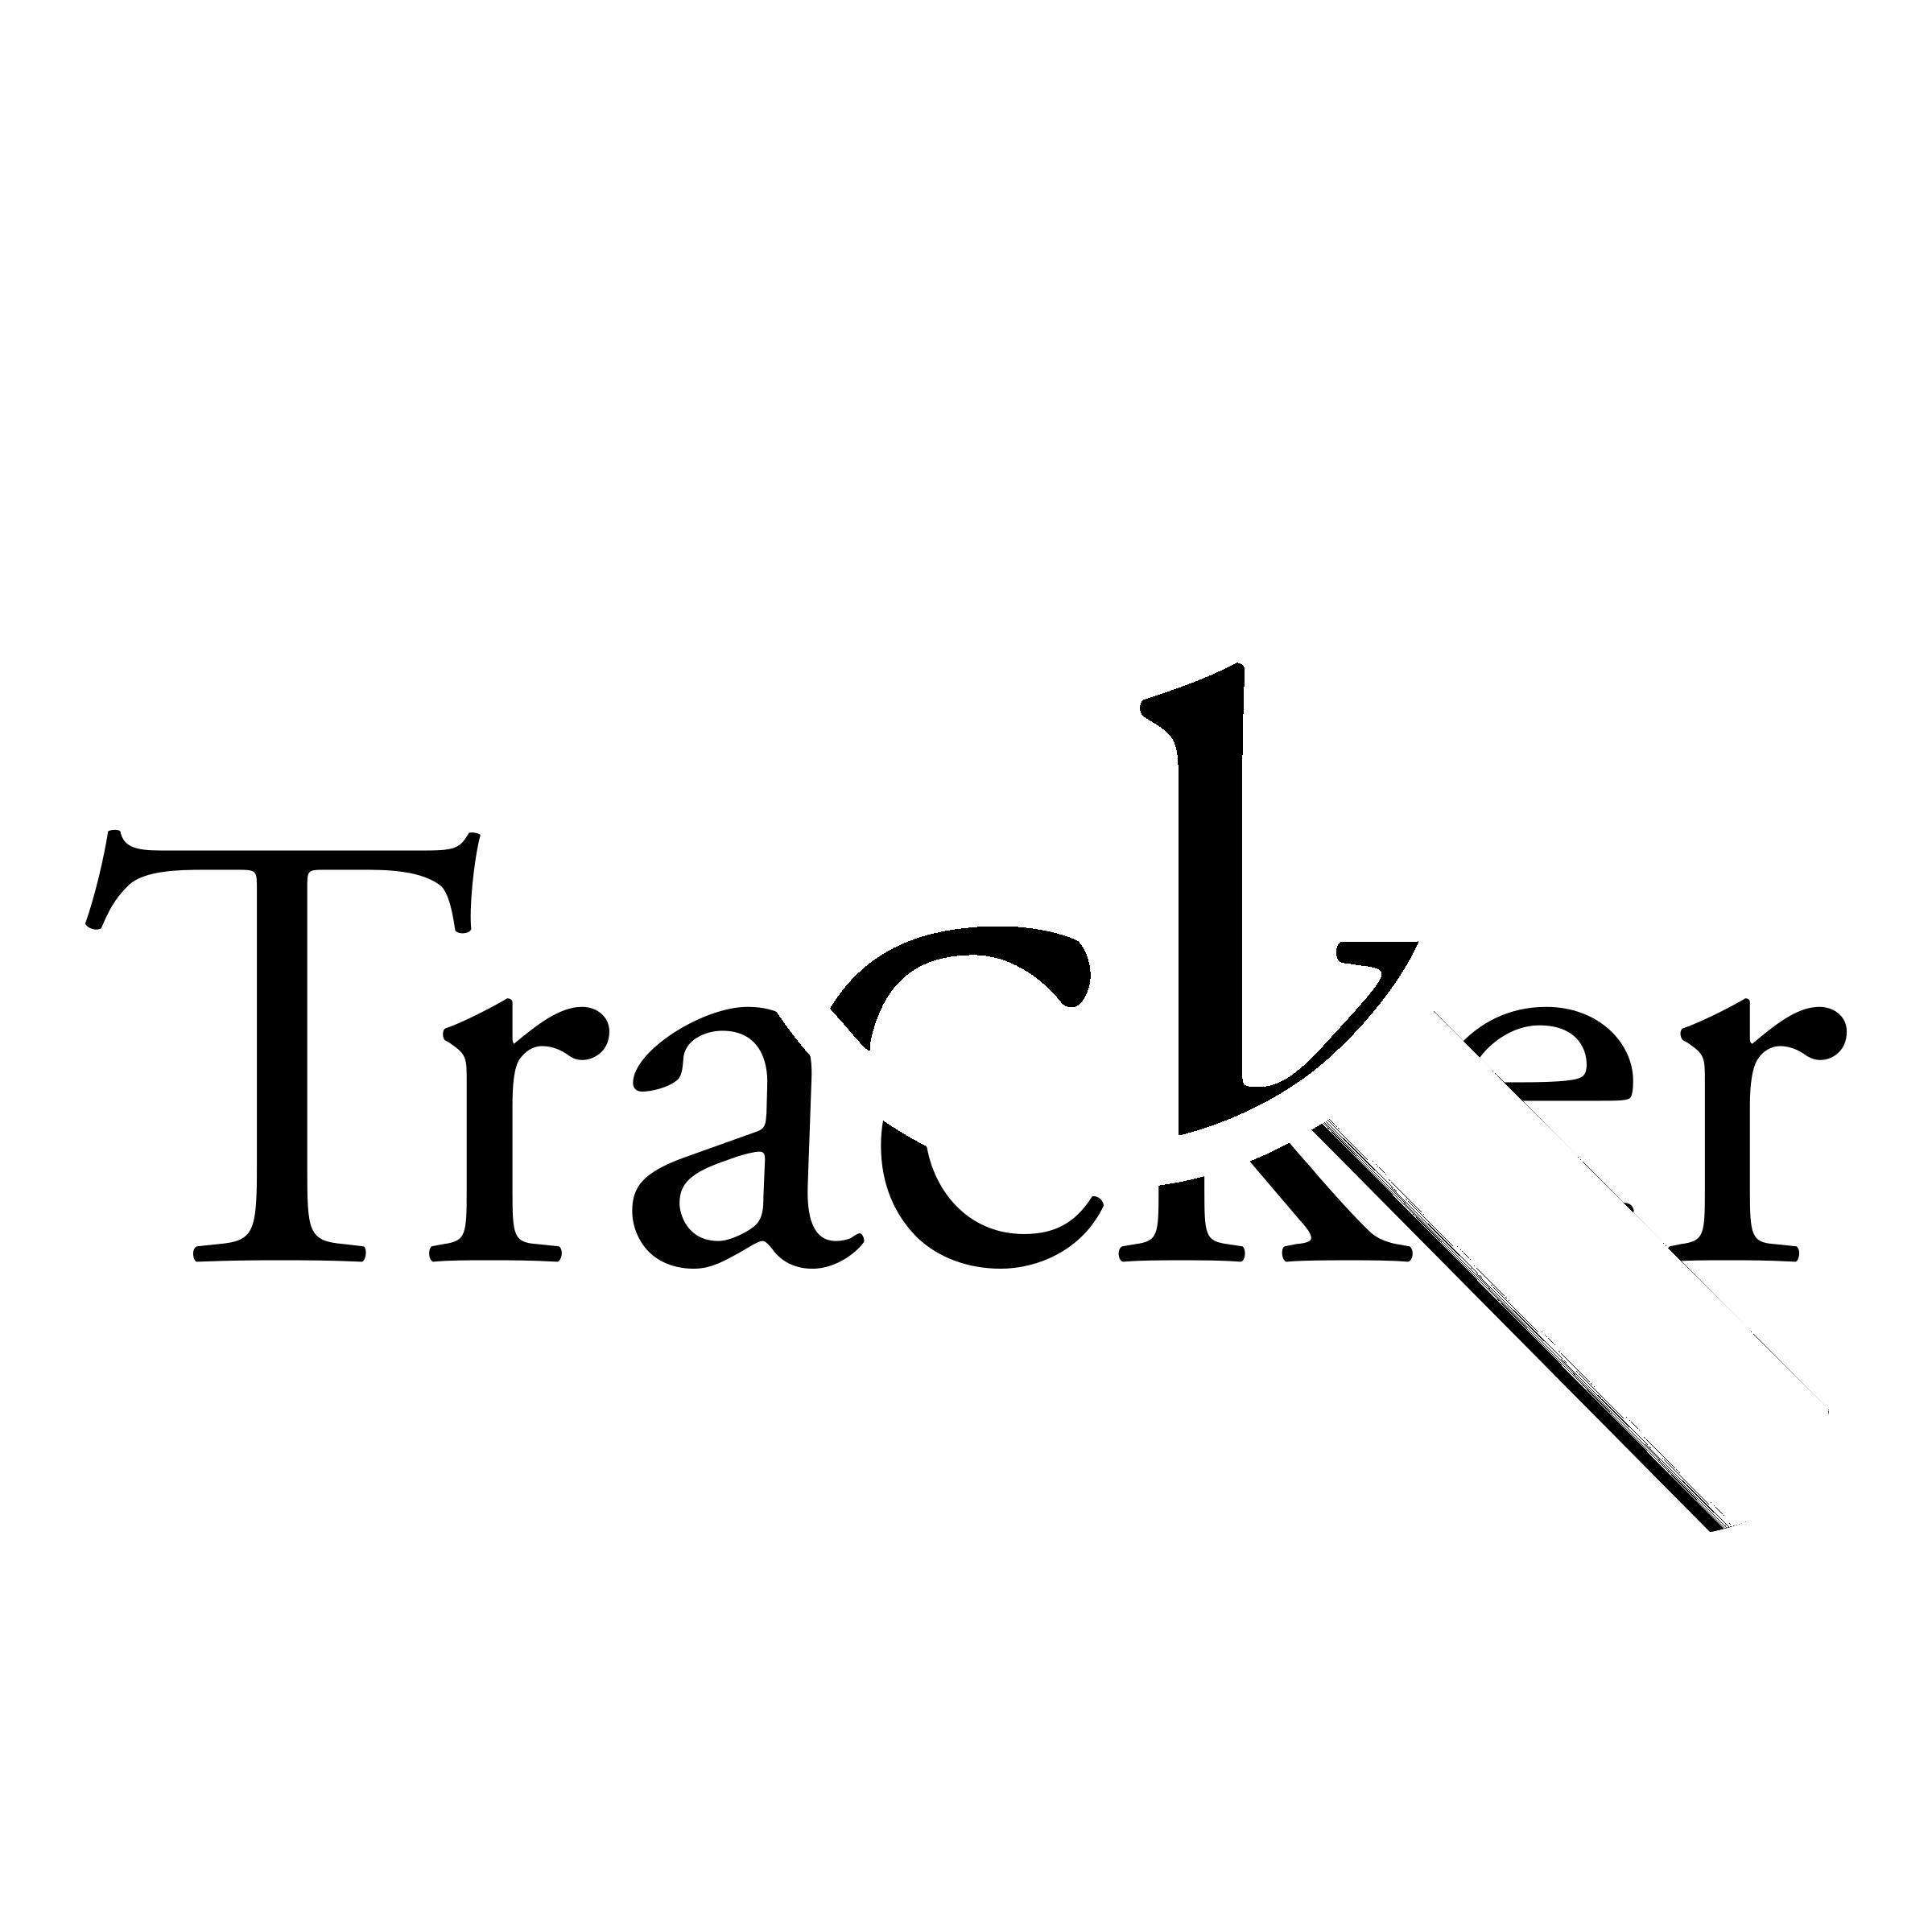 Tracker Logo - Tracker Logo PNG Transparent & SVG Vector - Freebie Supply